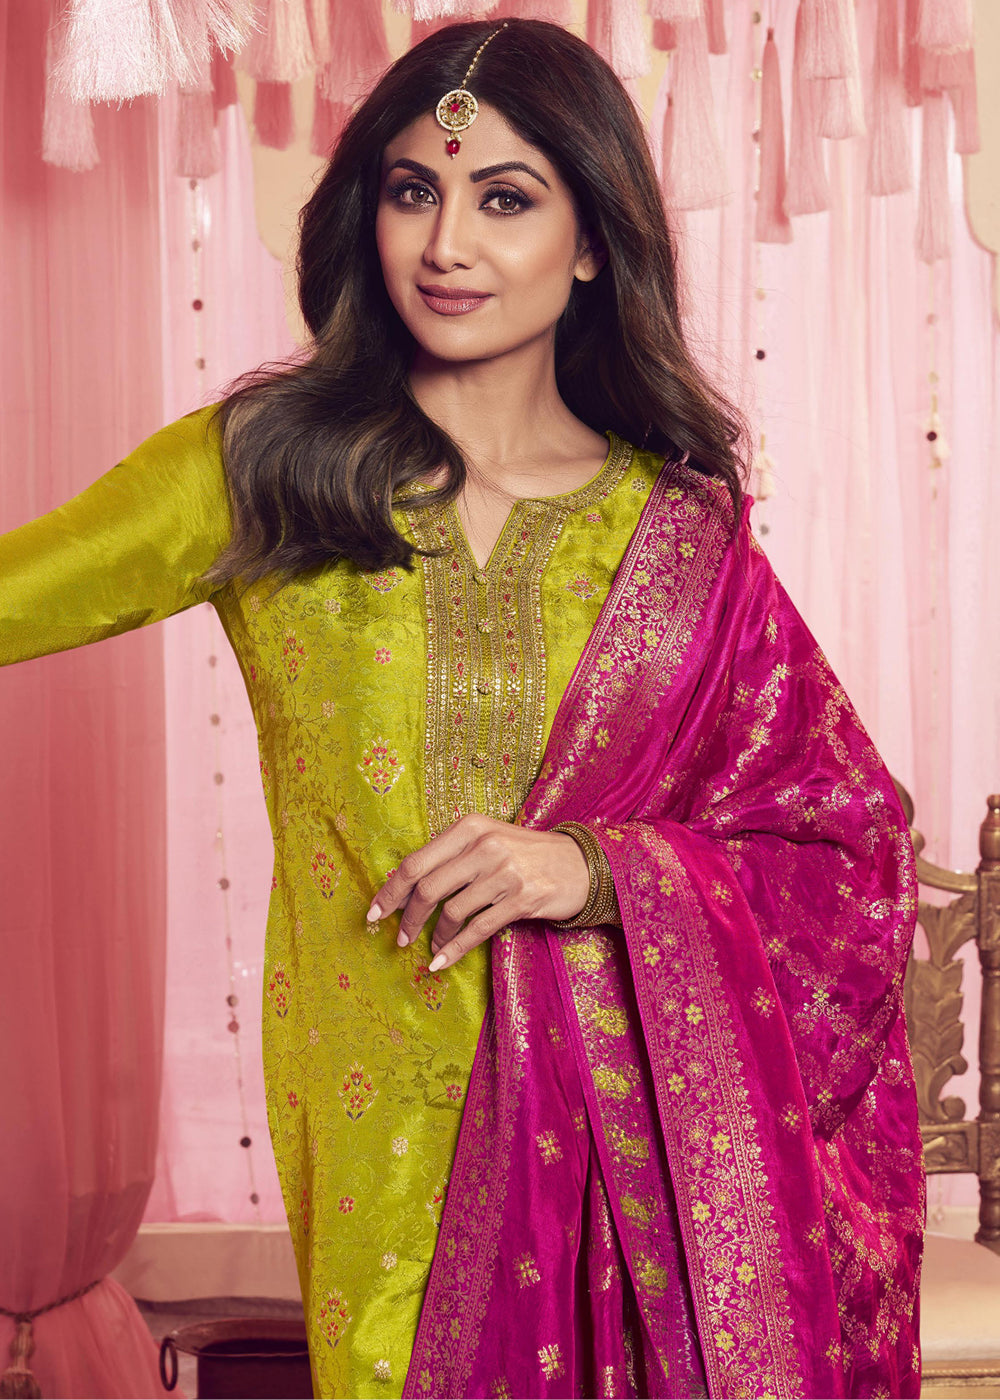 Buy Now Shilpa Shetty Neon Green Mehndi Wear Salwar Suit Online in USA, UK, Canada, Germany, Australia & Worldwide at Empress Clothing.